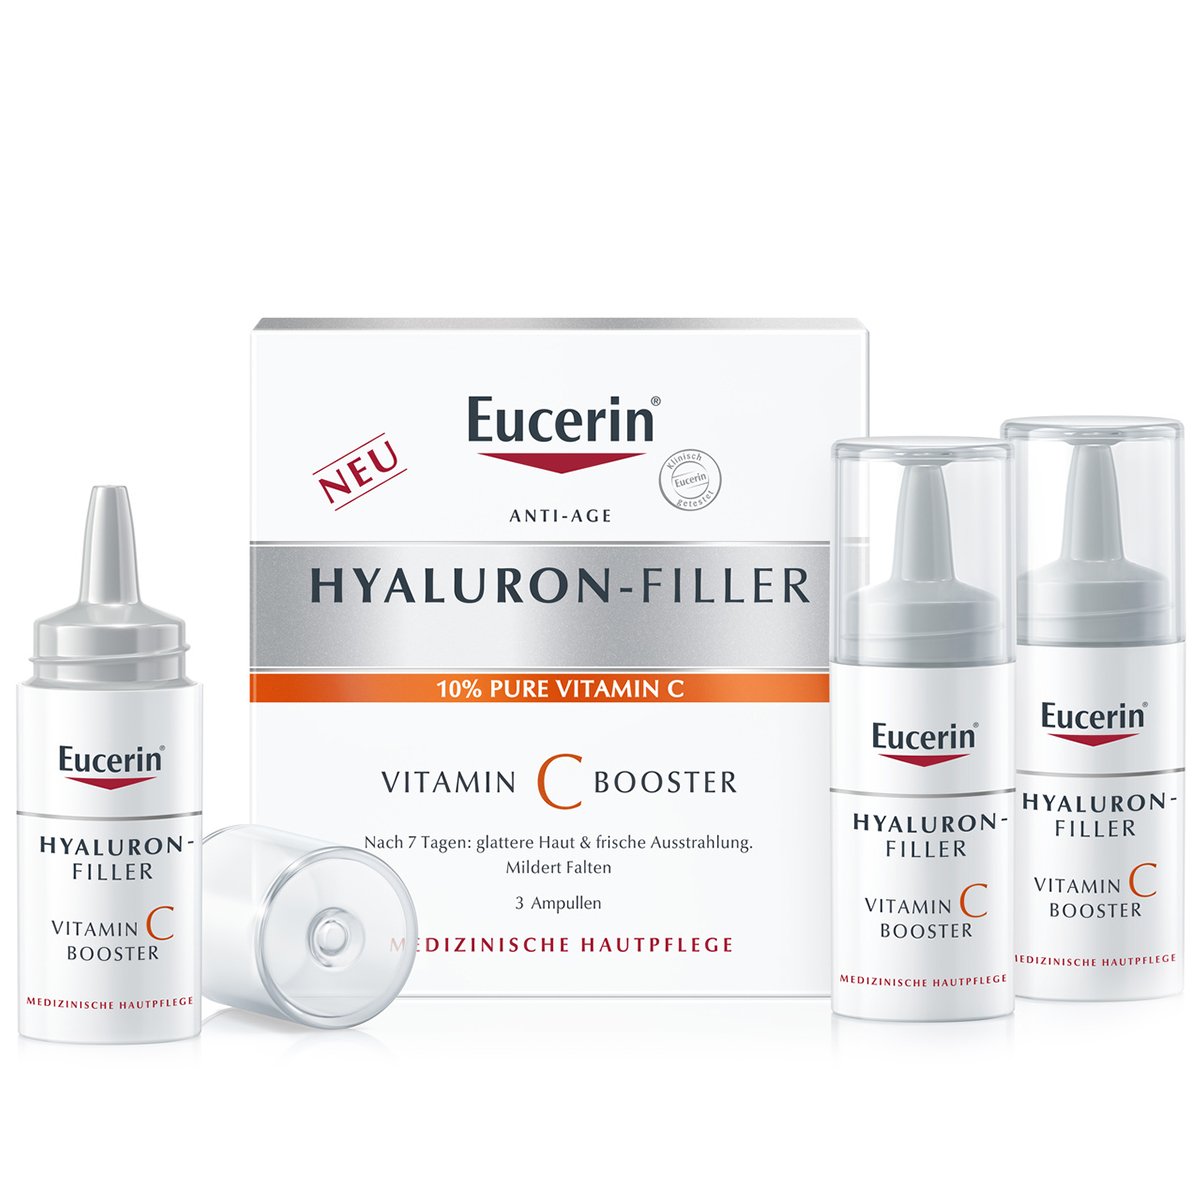 Eucerin Hyaluron Filler Vitamin C Booster Opinie